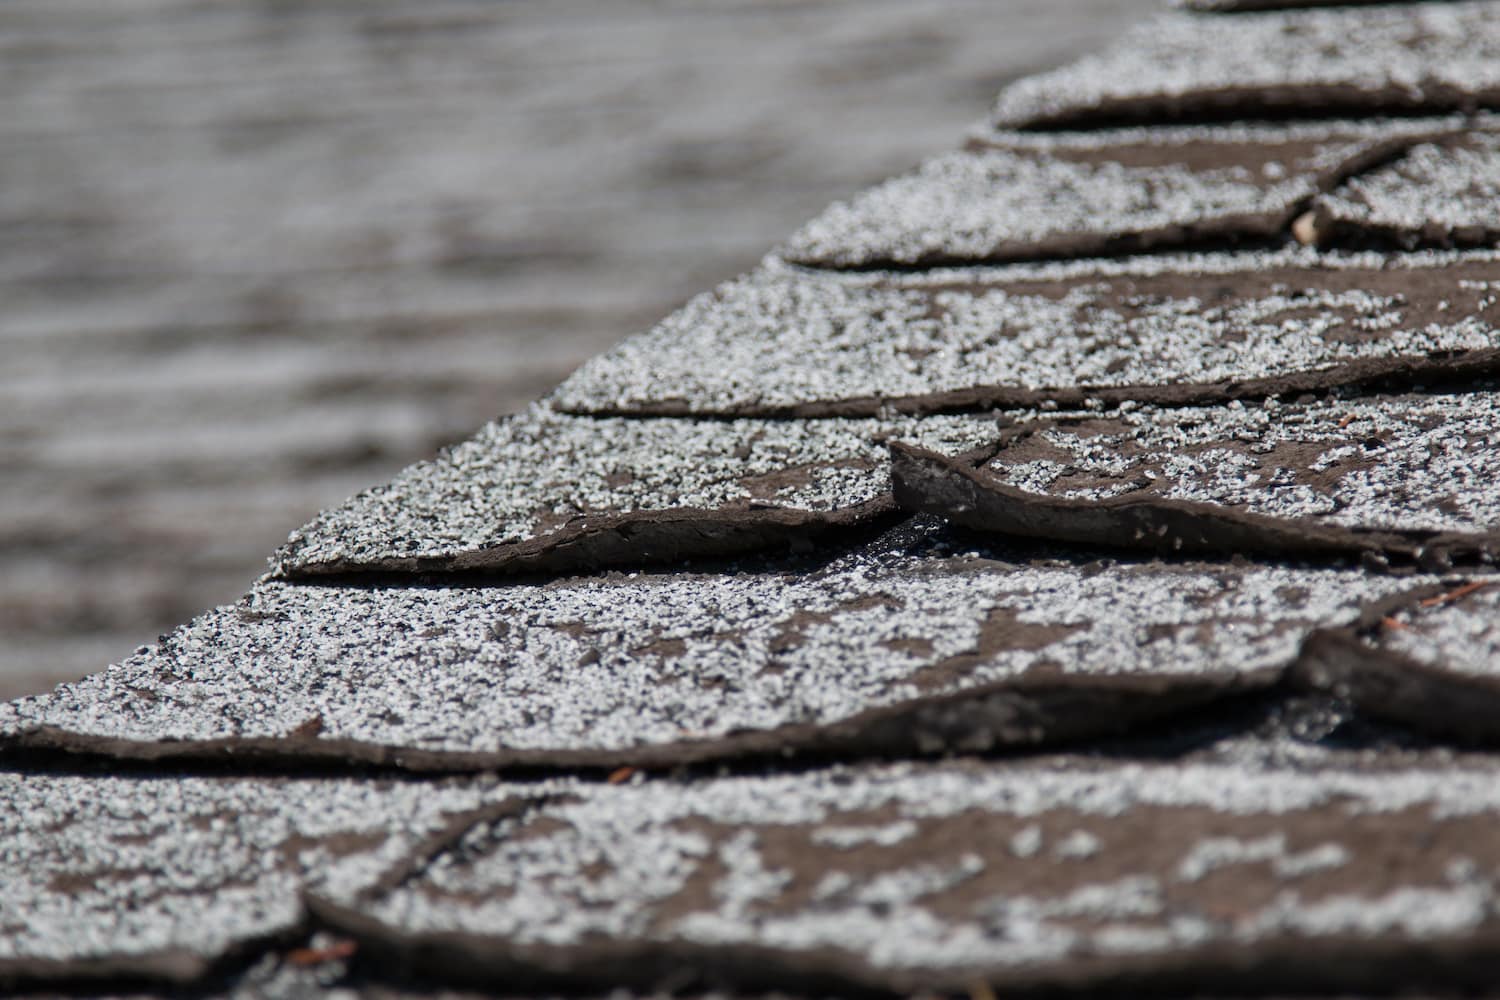 roof repair up close view of curling algae covered asphalt shingles